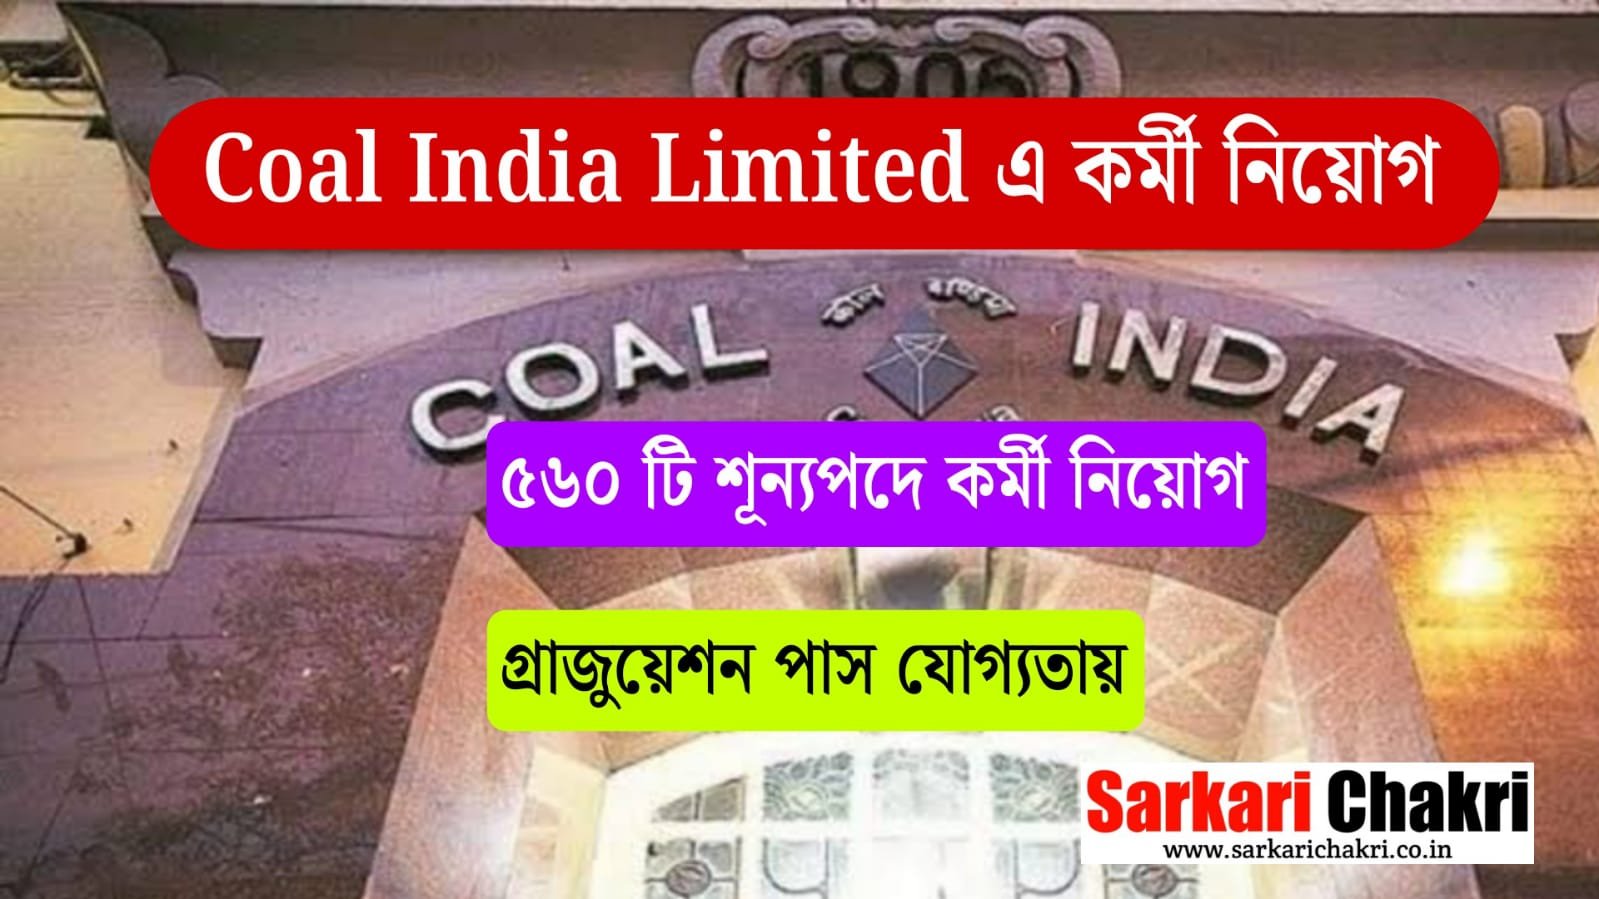 Coal India Limited এ কর্মী নিয়োগ, ৫৬০ টি শূন্যপদে